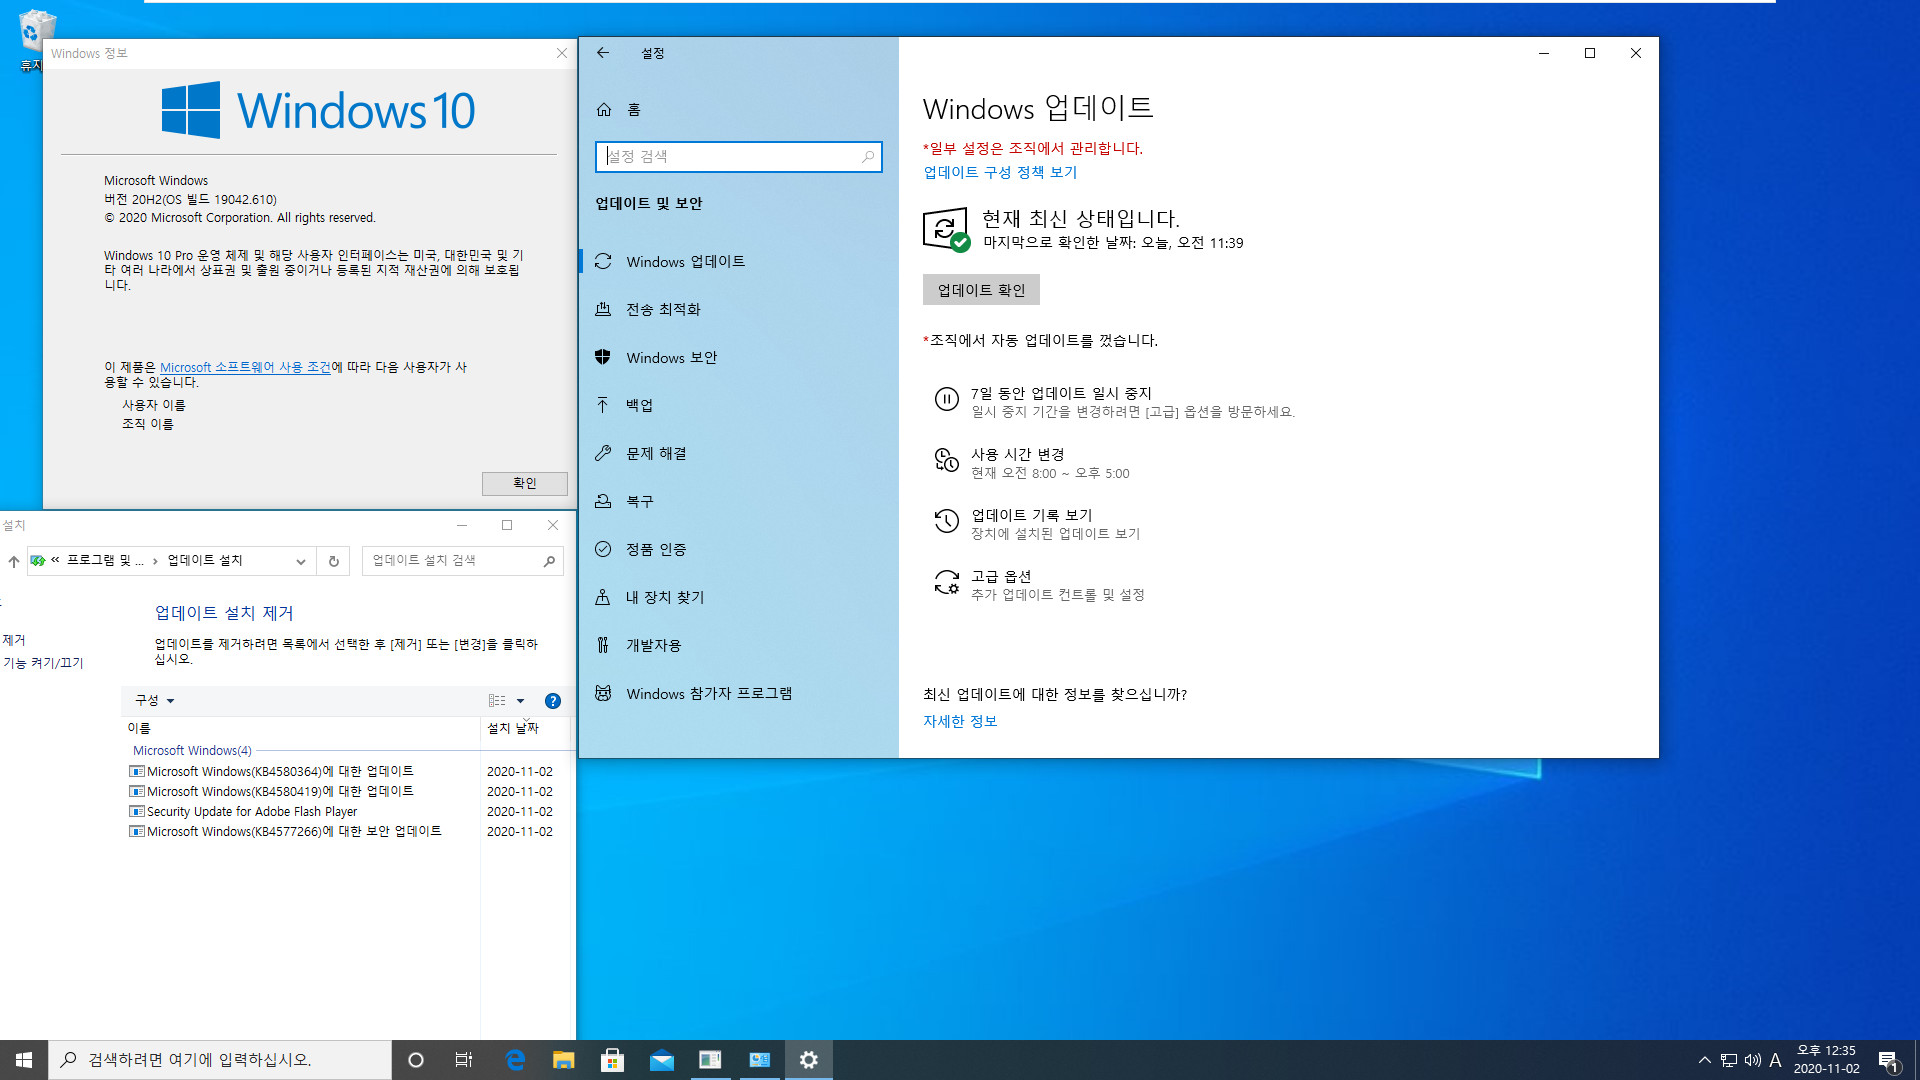 Windows 10 버전 20H2 기능 업데이트 KB4562830 폴더의 mum 파일들만 찾아서 설치하기.bat - 크로미엄 엣지 설치하지 않고 버전 20H2만 설치하기 테스트 -  msu 파일 설치하면 되네요 2020-11-02_123541.jpg